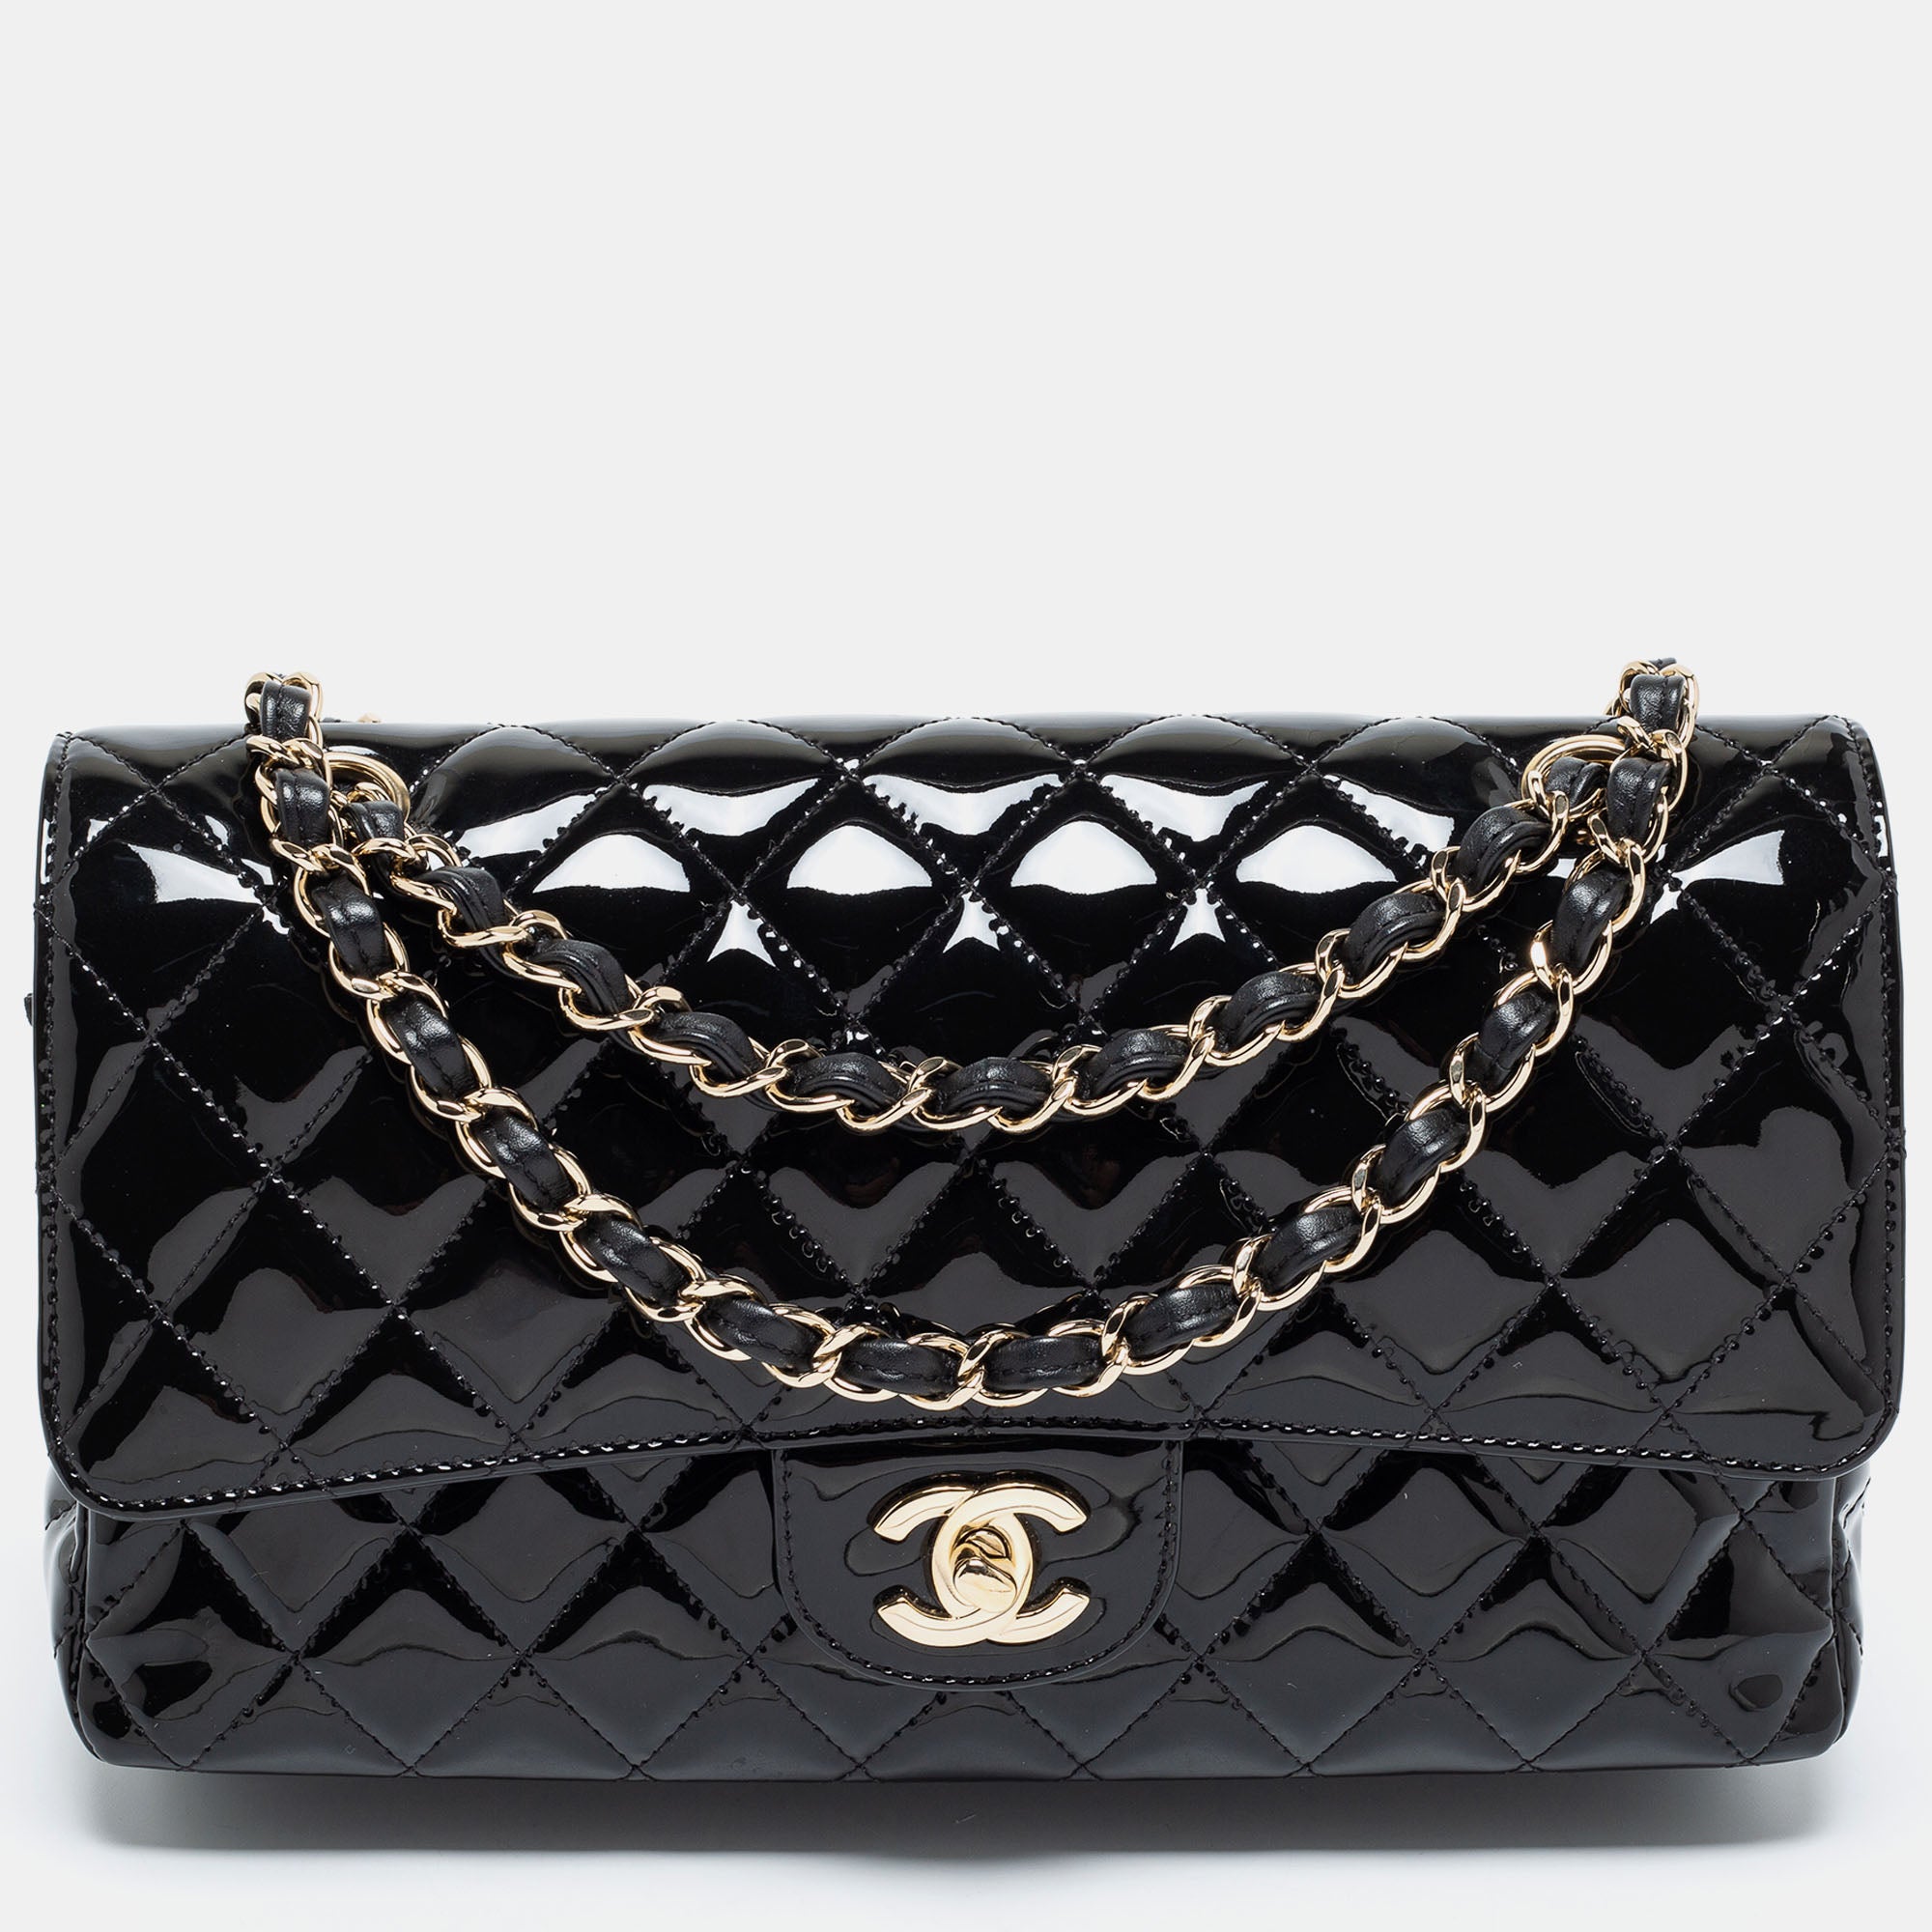 Chanel White Caviar Mini Flap SHW Handbag | Handbag, White caviar, Trending  handbag